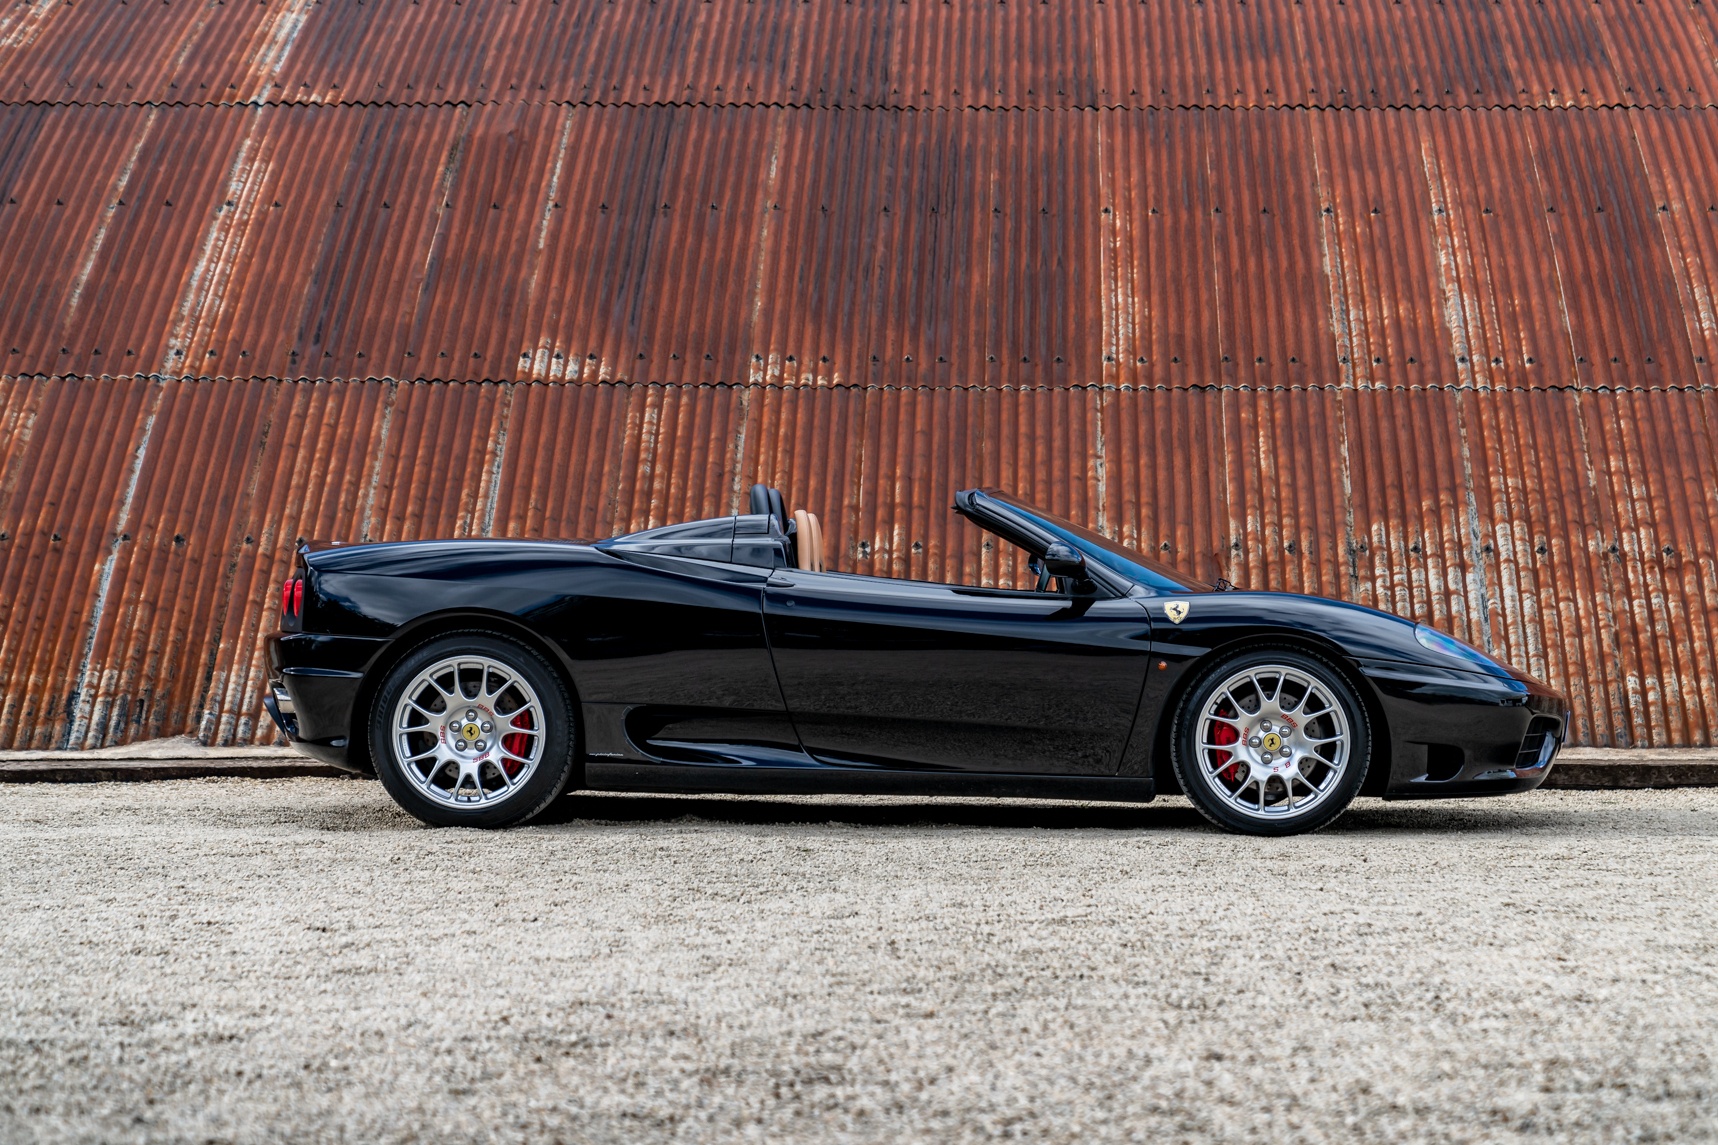 Ferrari-360-Spider-David-Beckham-anh-9.jpeg